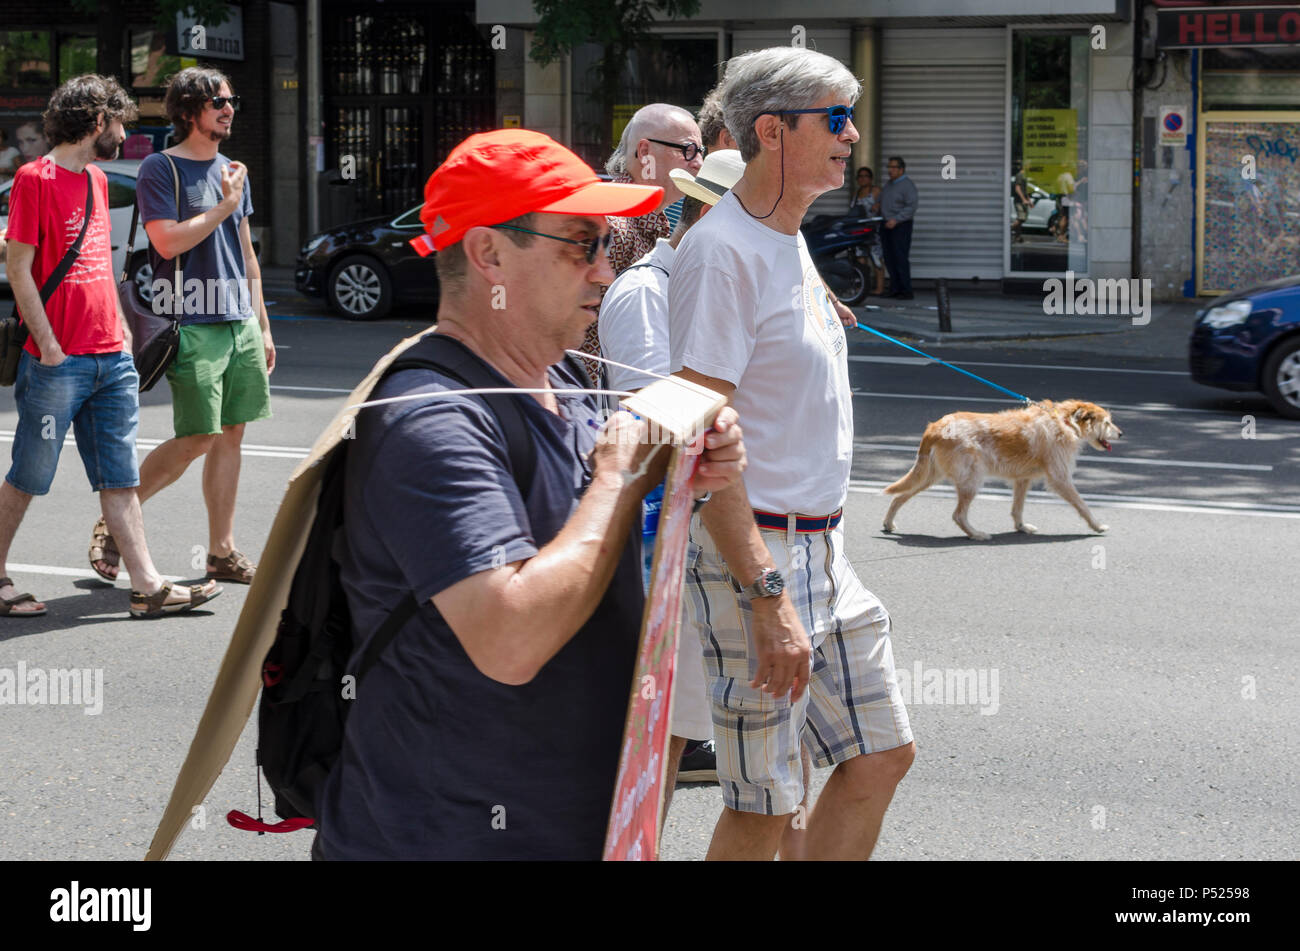 Madrid, Spain, 24 th June 2018. Rally of men against sexist in San Bernardo street, 24 th June 2018 in Madrid, Spain. Credit: Enrique Davó/Alamy Live News. Stock Photo